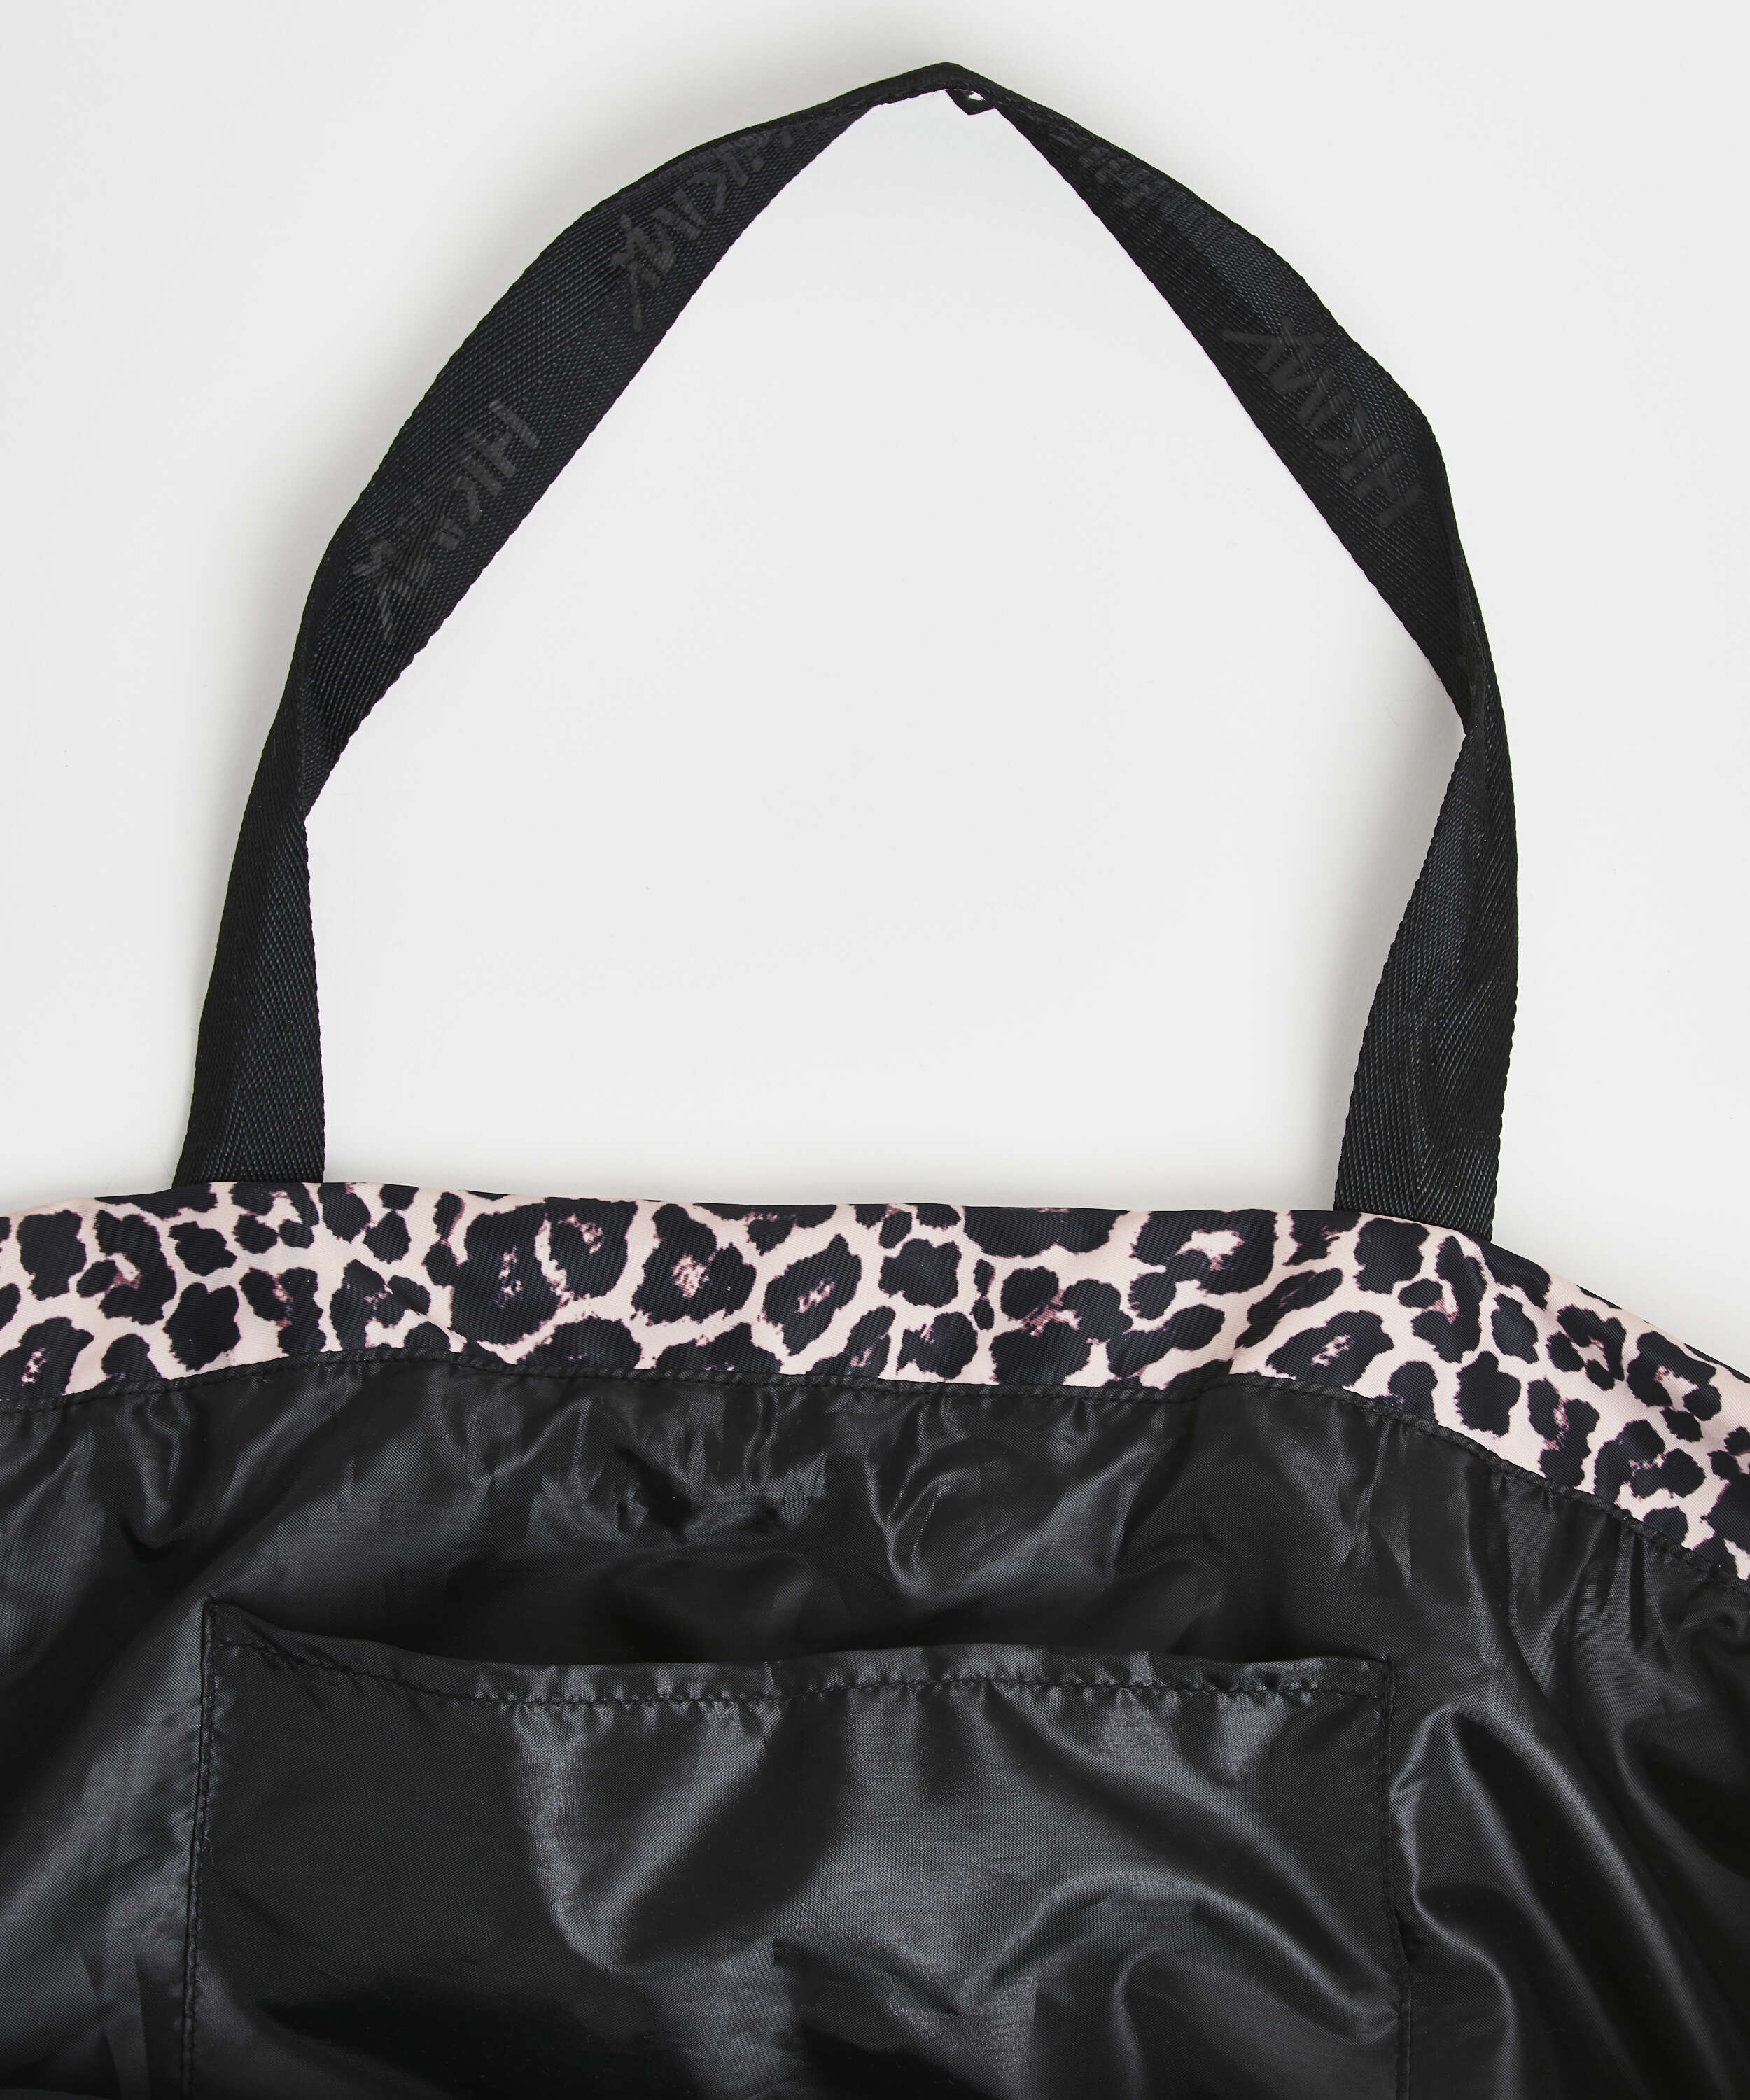 HKMX Leopard Sports bag, Black, main